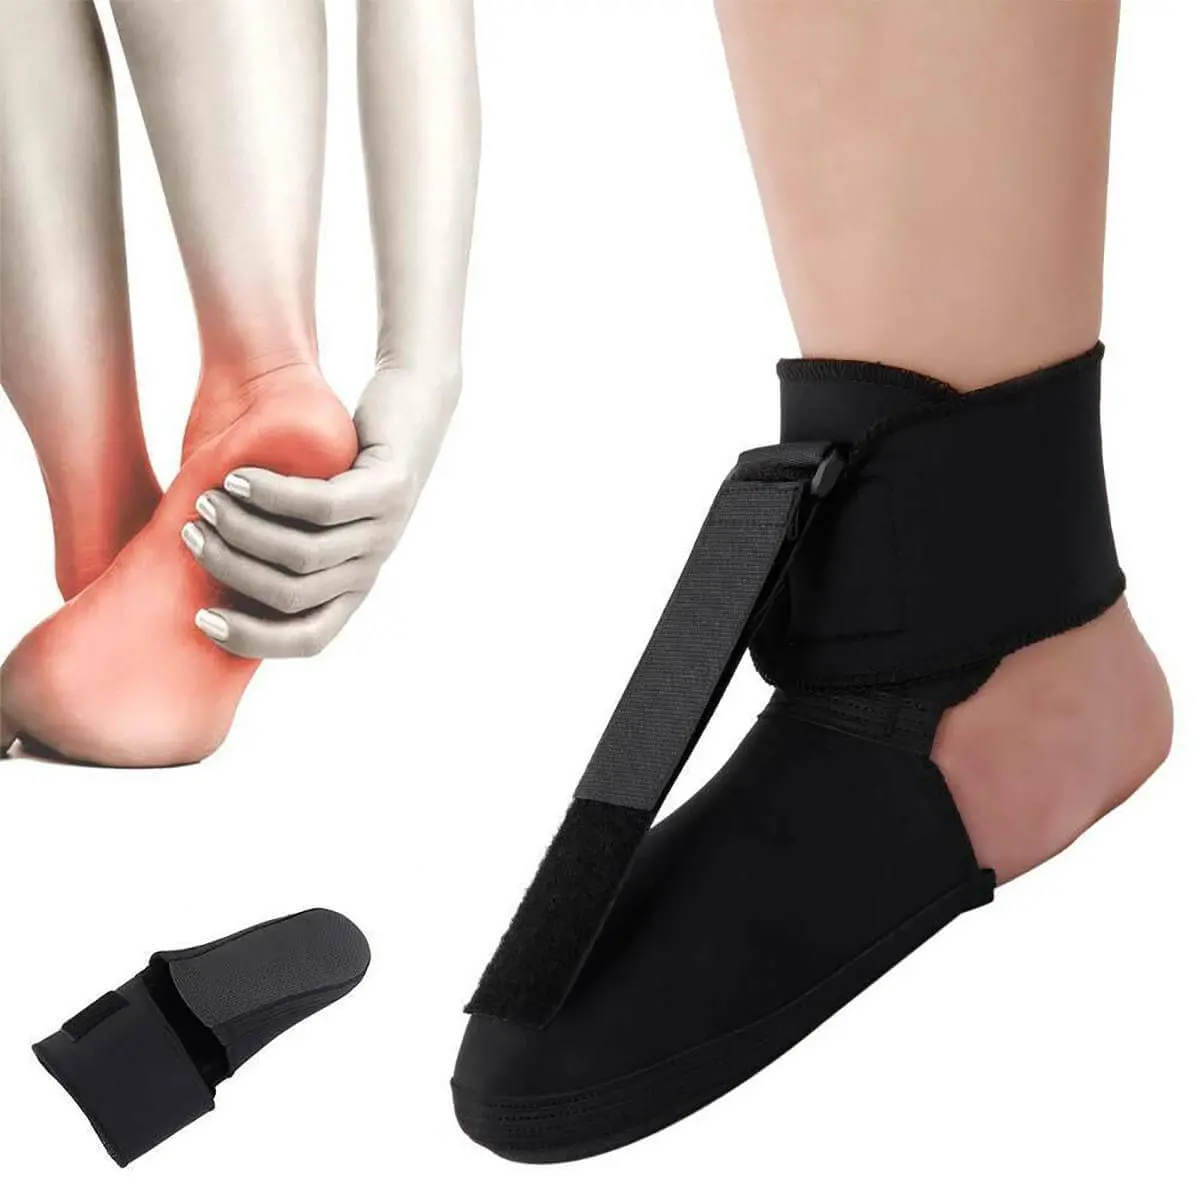 Adjustable Plantar Fasciitis Foot Brace | Night Splint Fashion Support For Heel Pain Relief